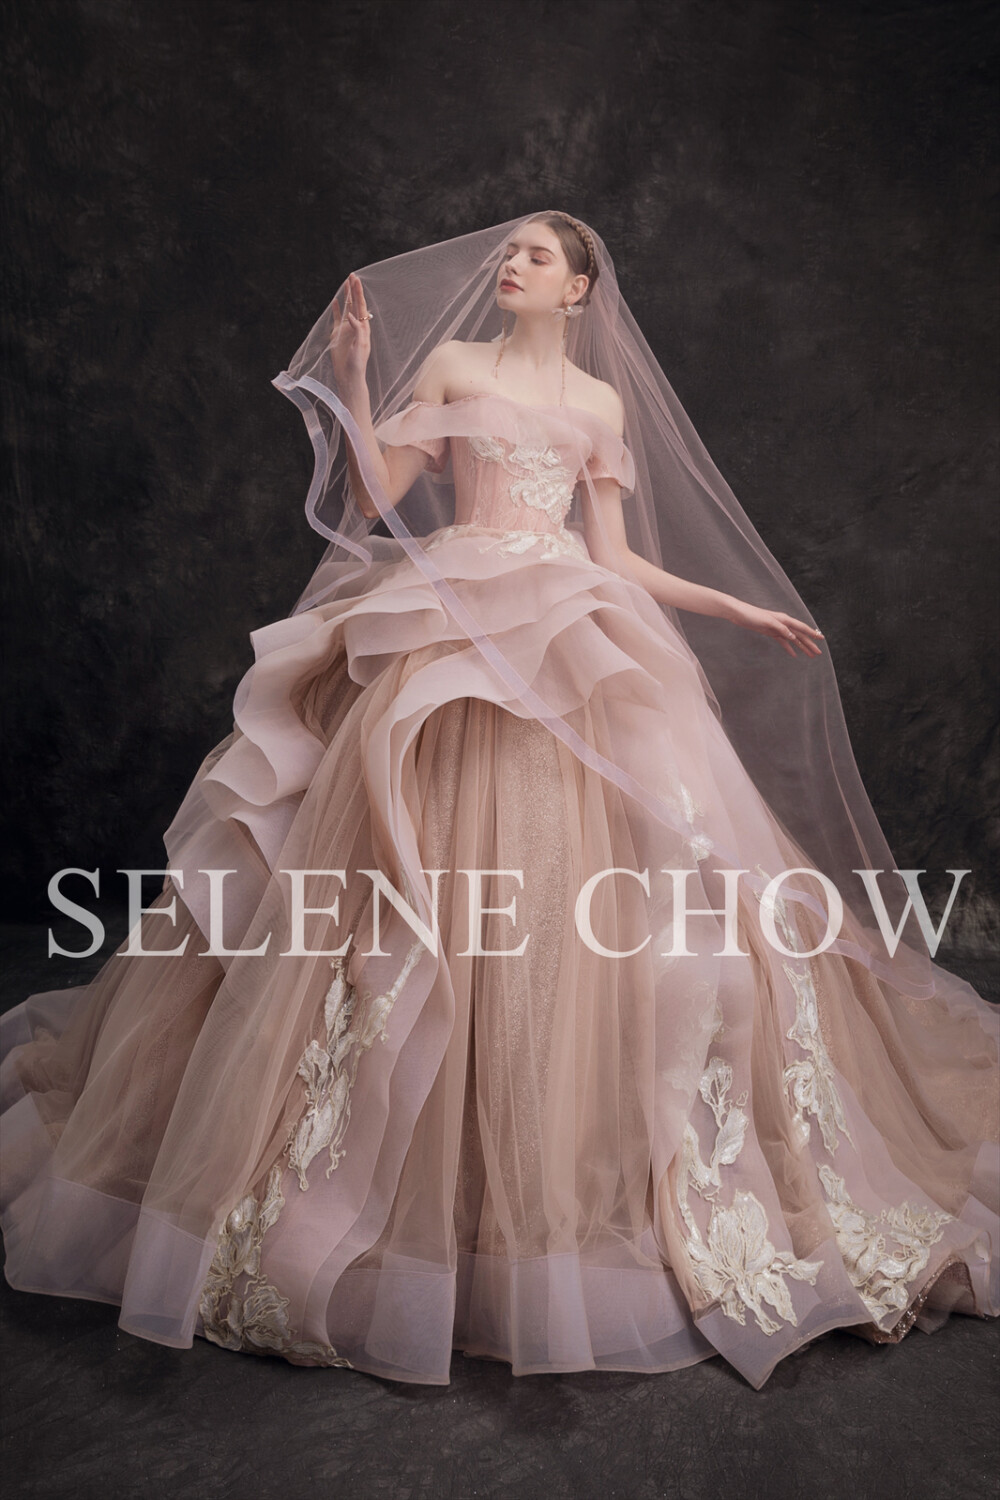 SELENE CHOW 婚纱，图源微博cr：@设计师Selene Chow